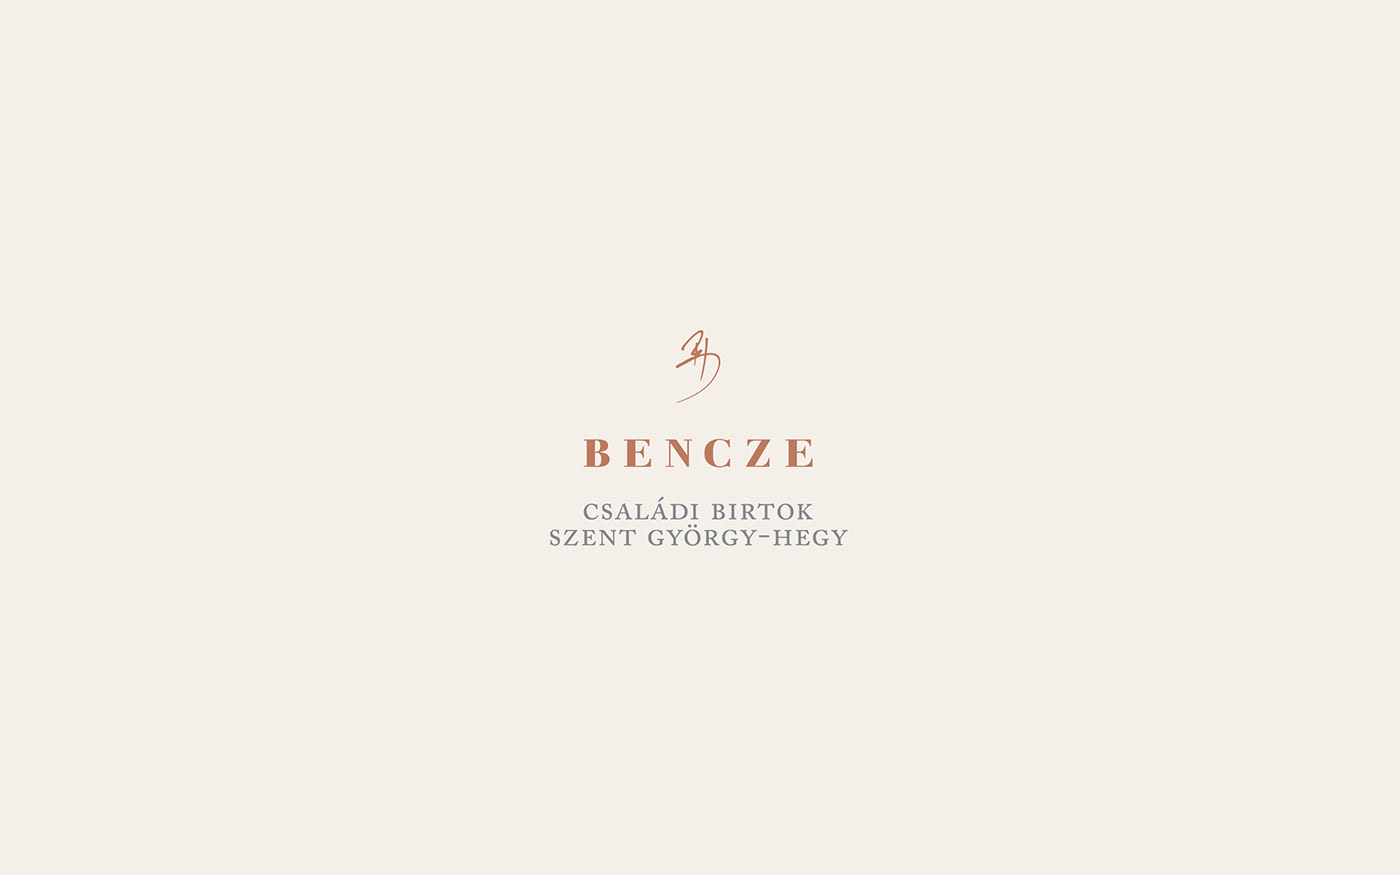 Bencze wine winery wine branding wine logo wine pakaging wine print wine illustration wine design